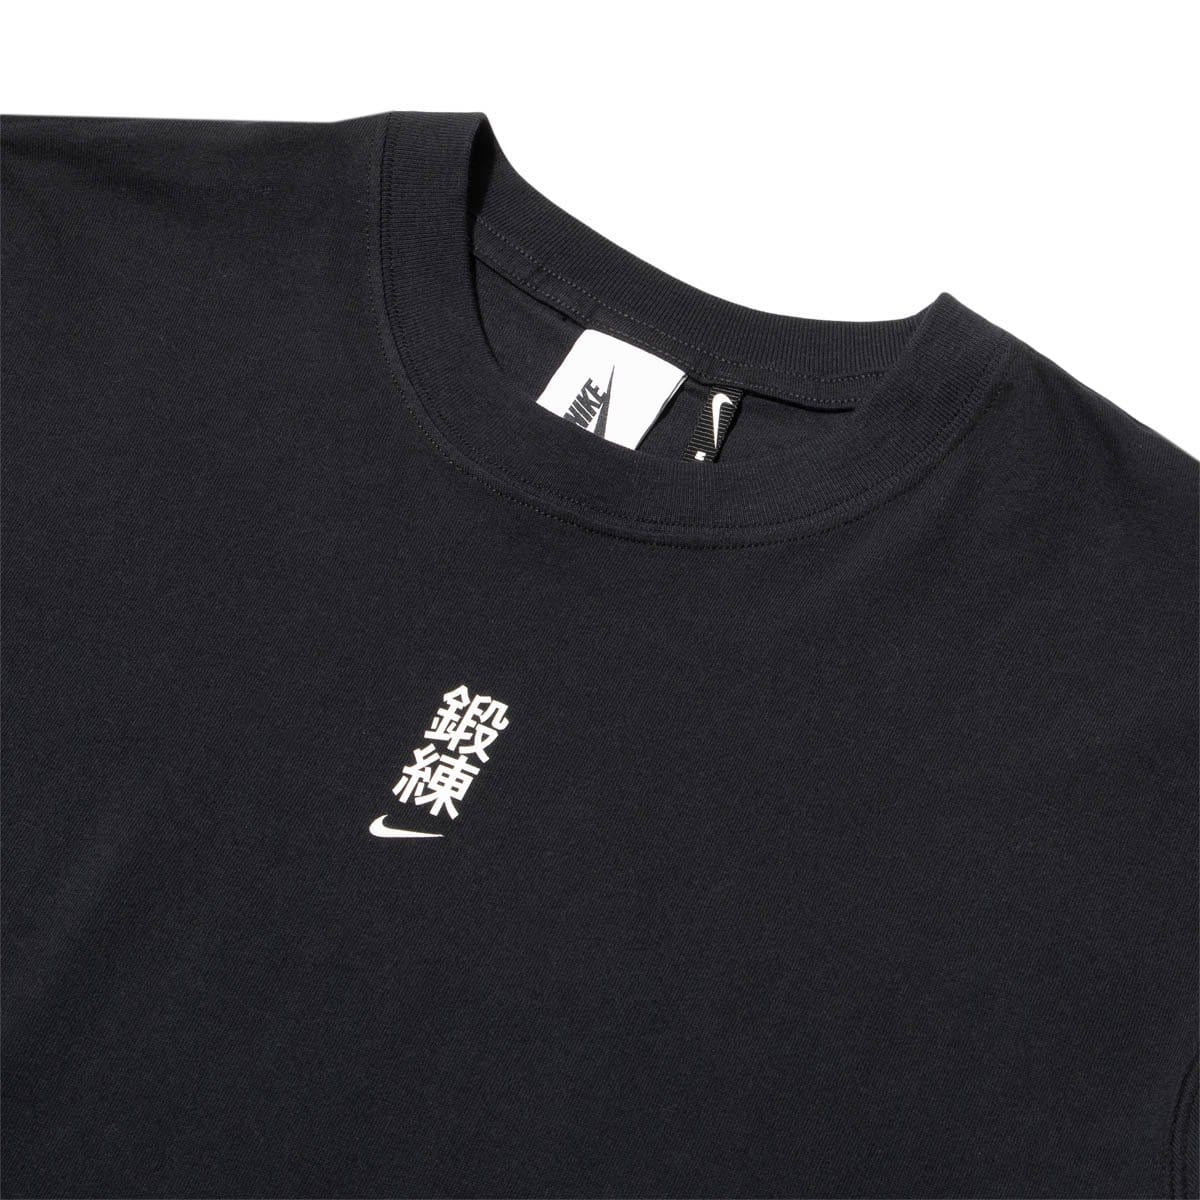 Nike T-Shirts x MMW S/S TEE